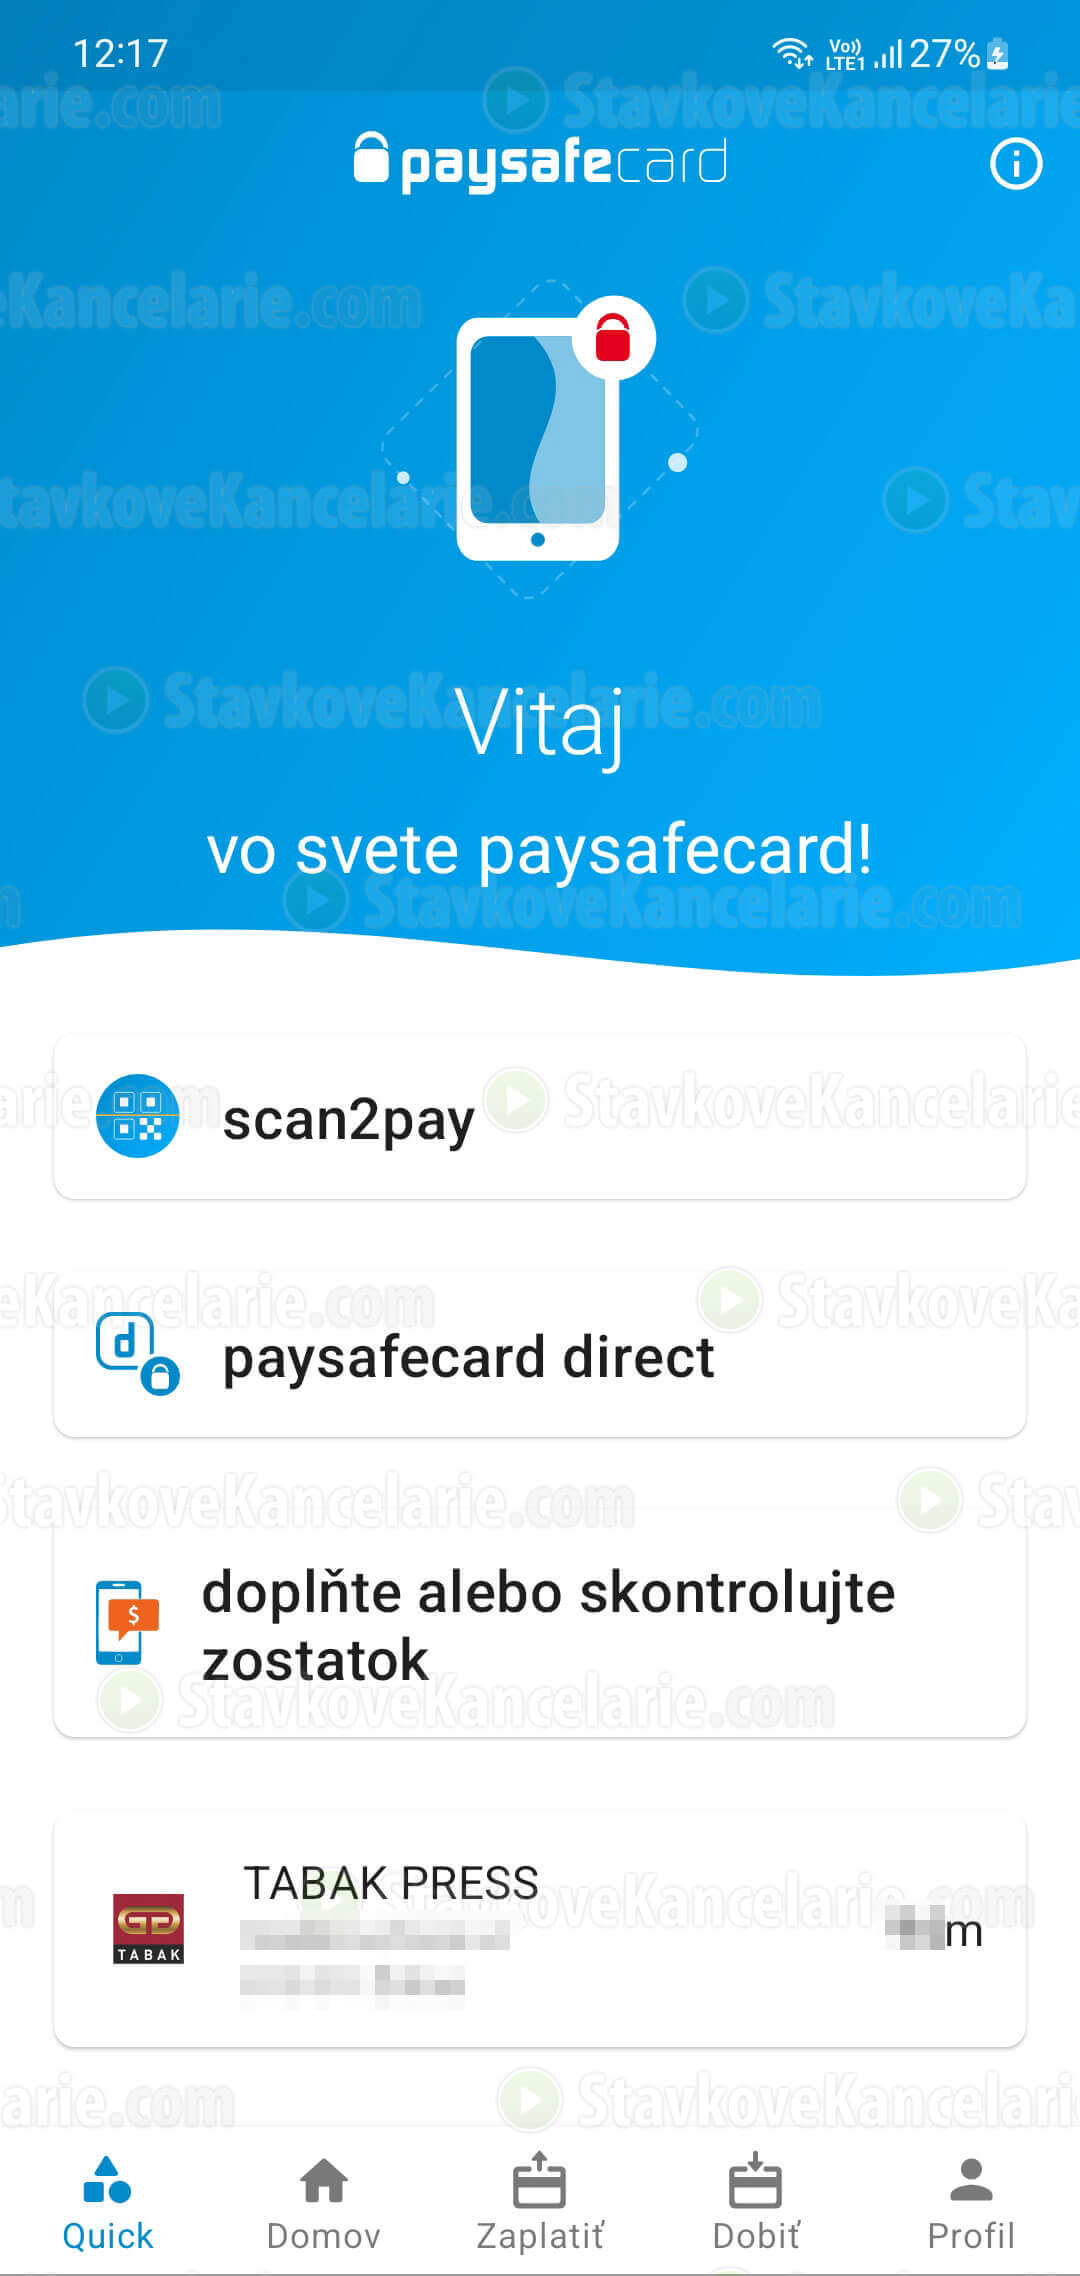 Úvodná obrazovka aplikácie paysafecard